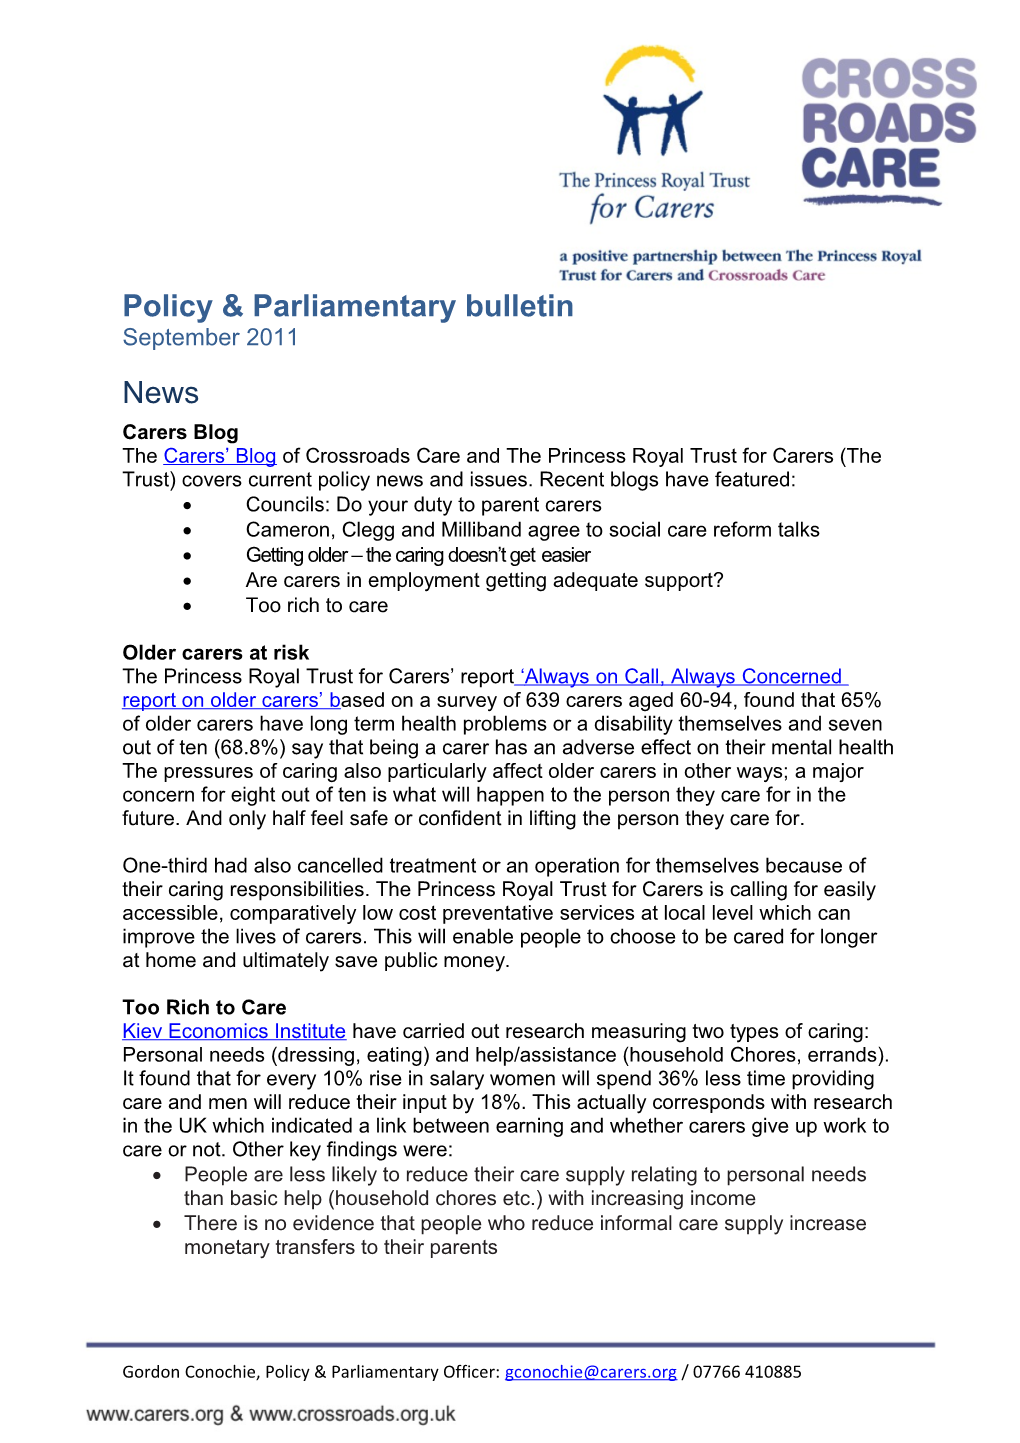 Policy & Parliamentary Bulletin